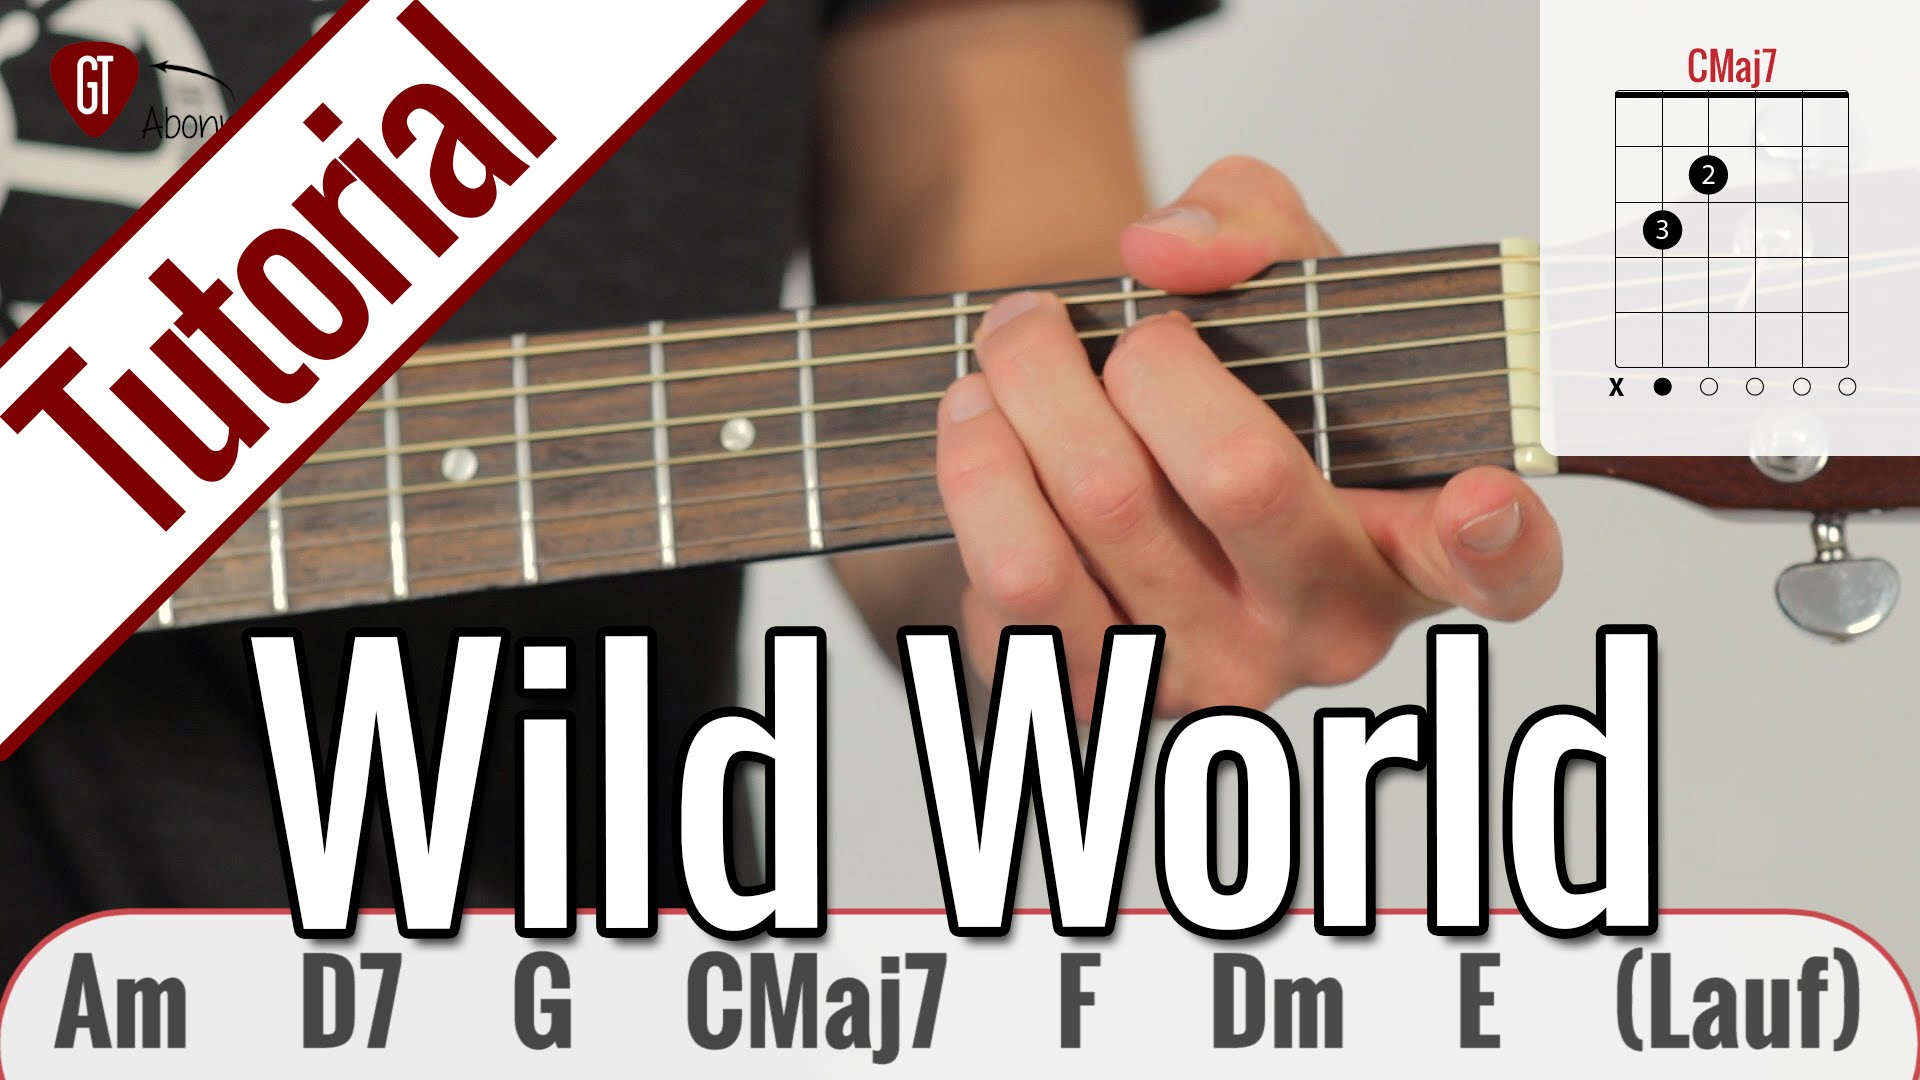 Cat Stevens (Yusuf Islam) – Wild World | Gitarren Tutorial Deutsch